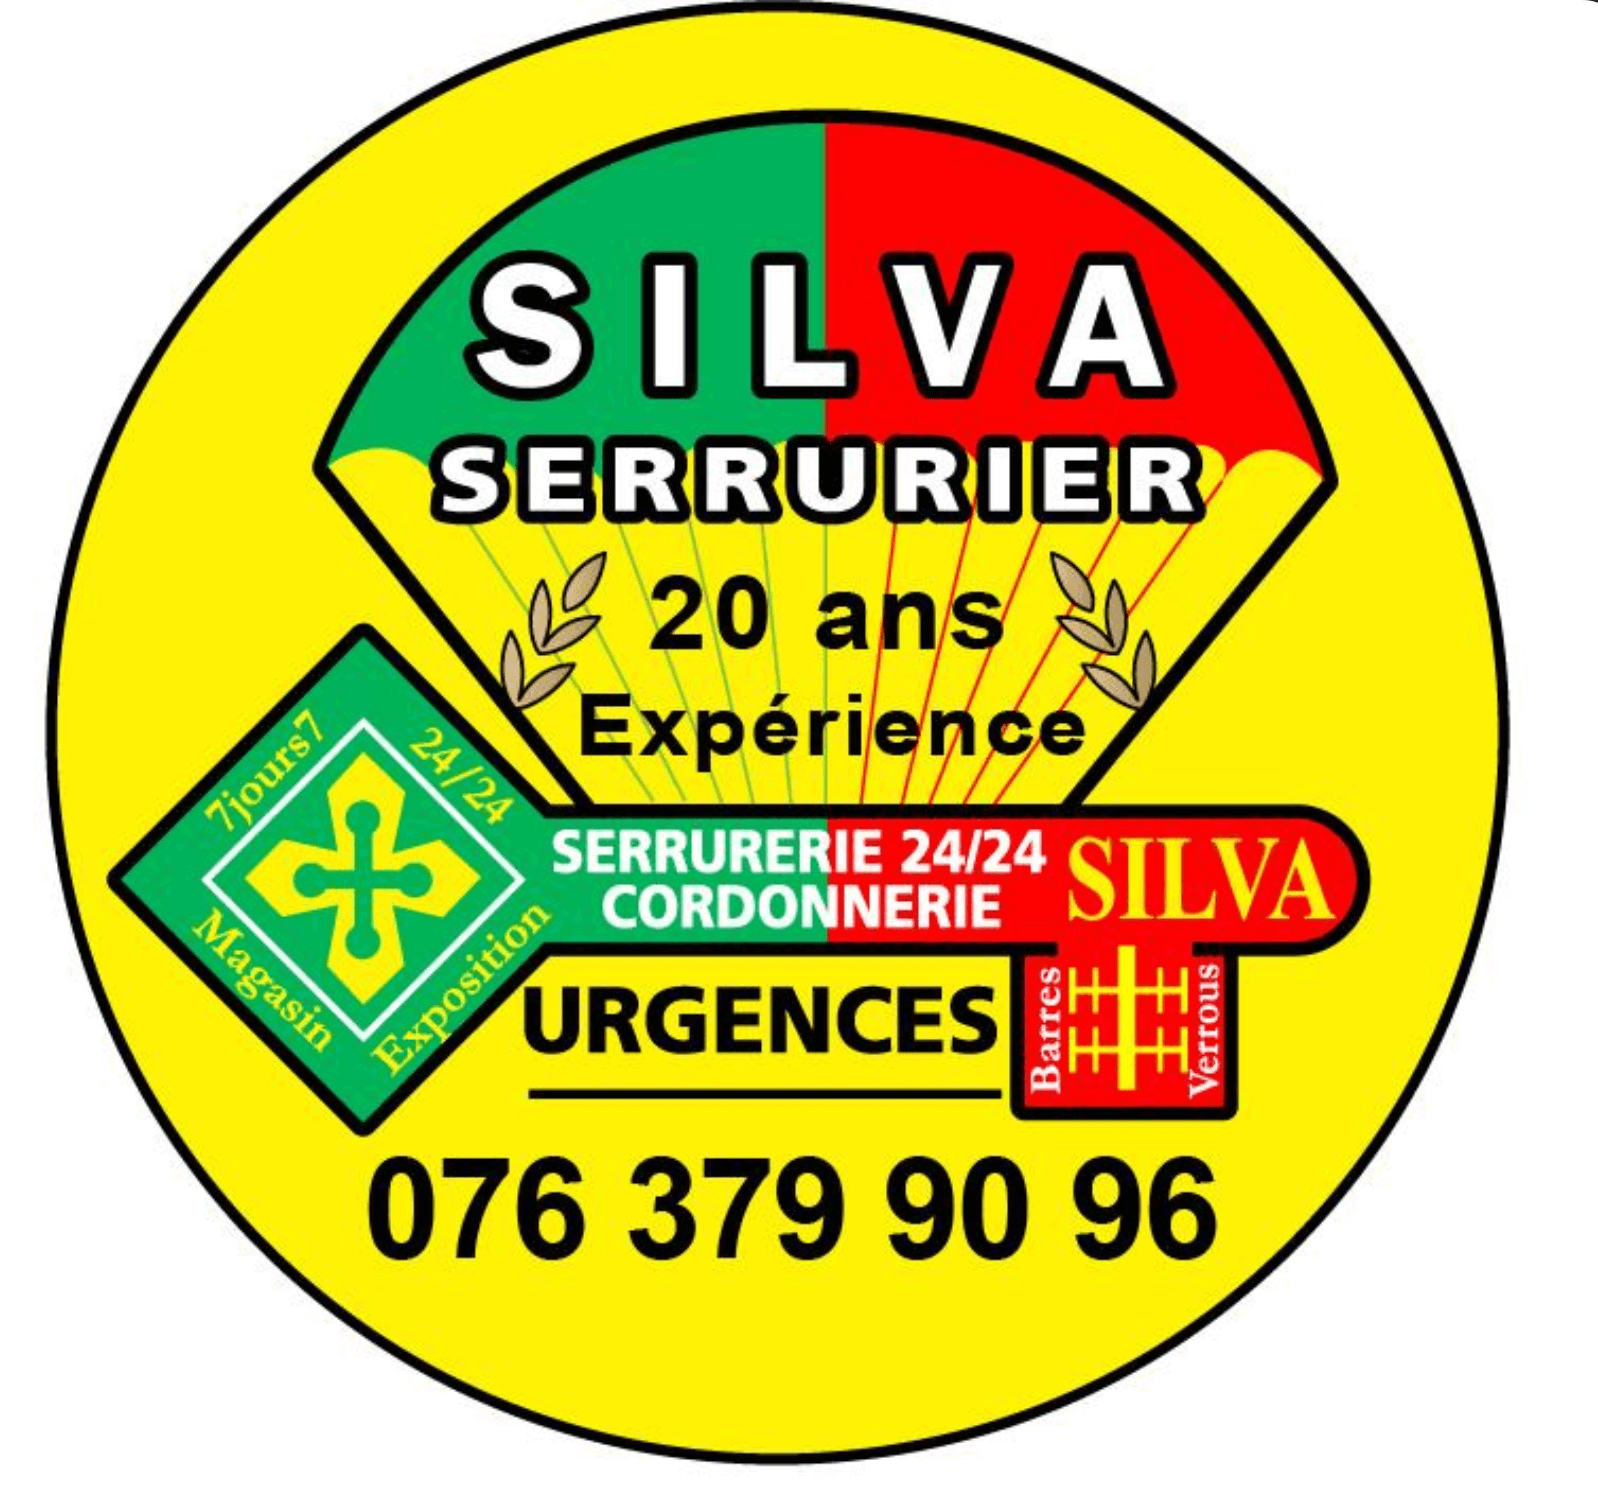 SERRURERIE SILVA PARTENAIRE FREE RUNNERS